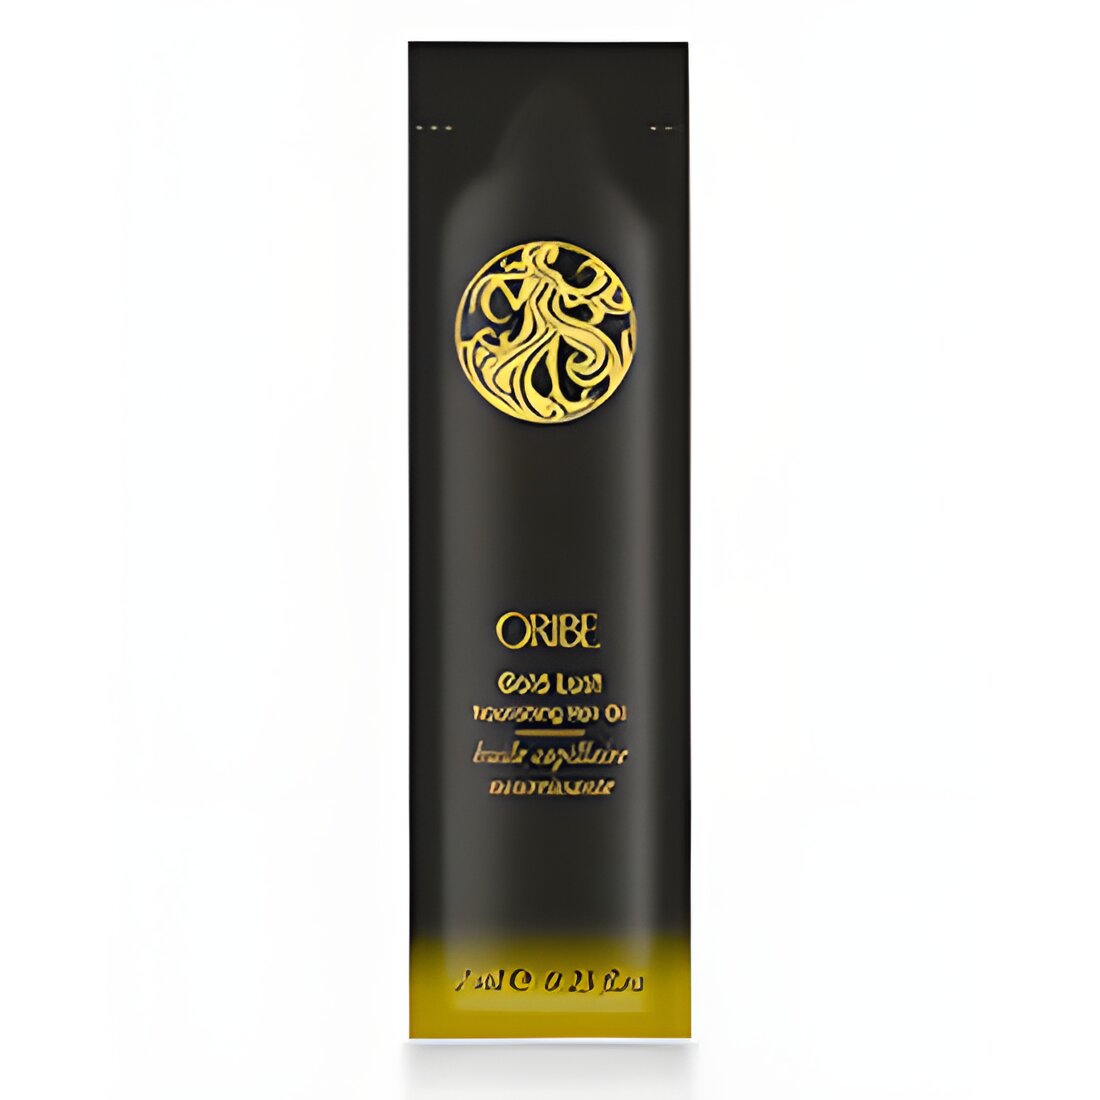 Free Oribe Gold Lust Hair Oil Packette